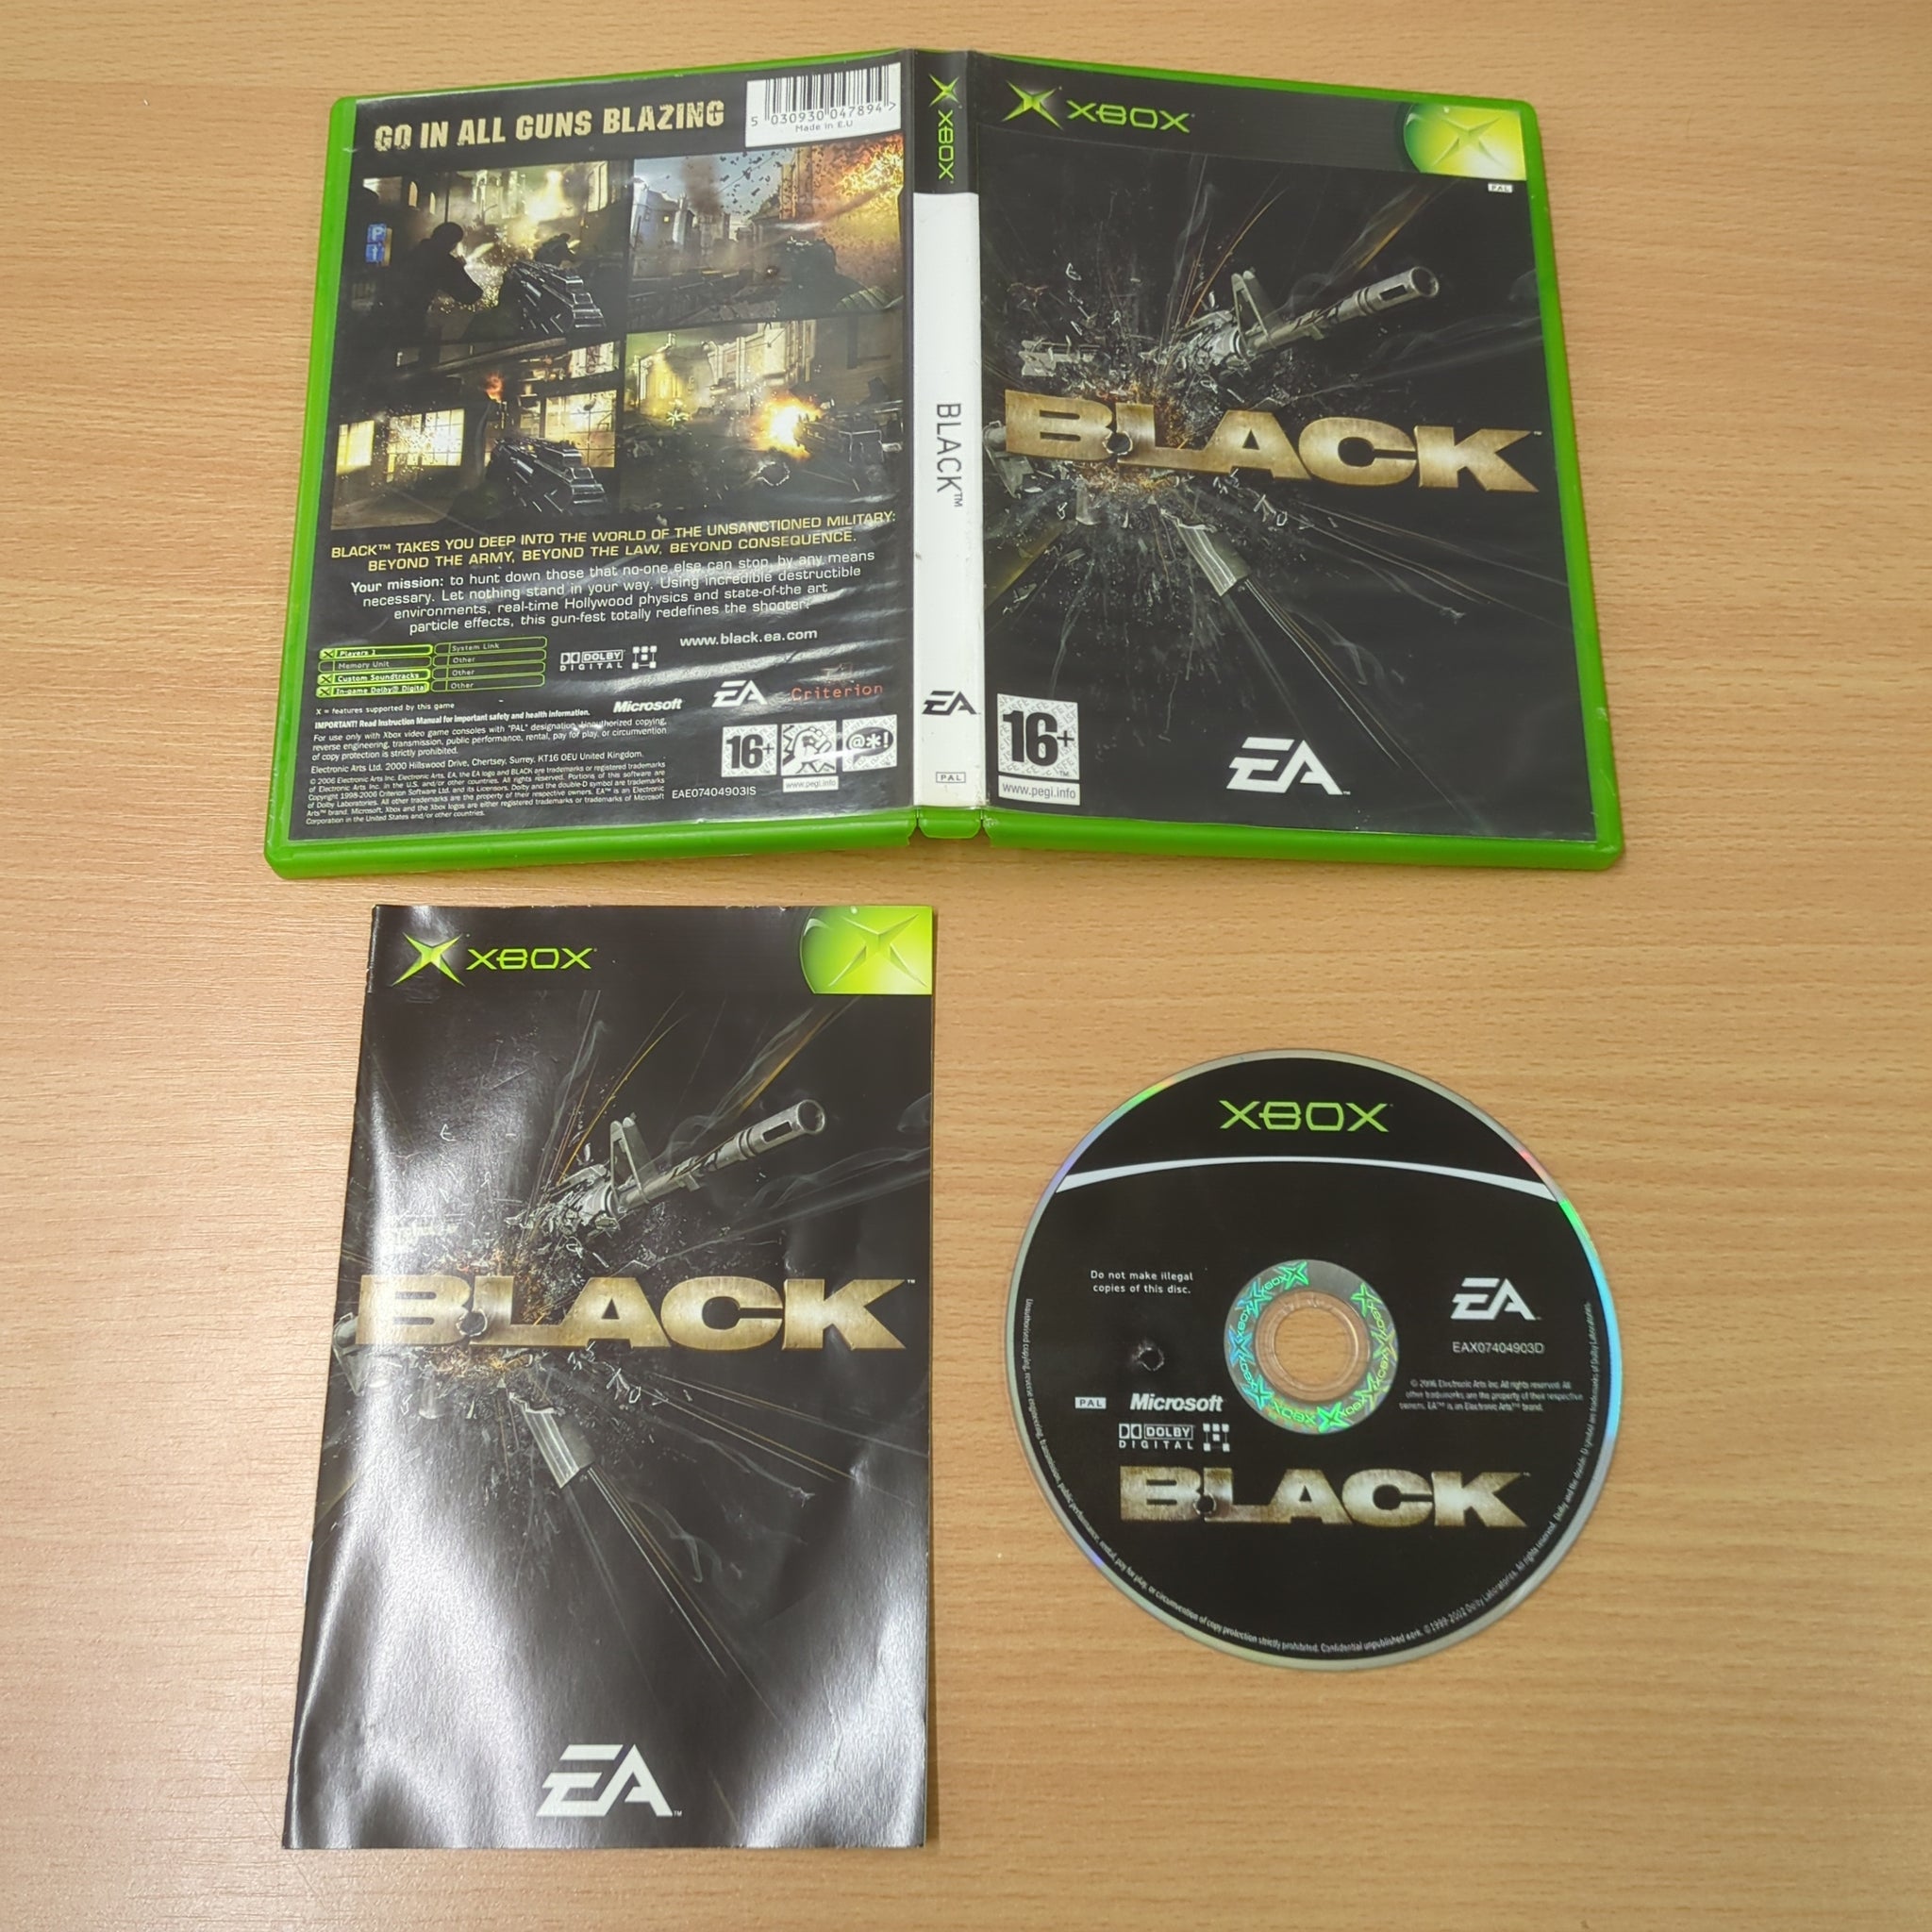 Black original Xbox game